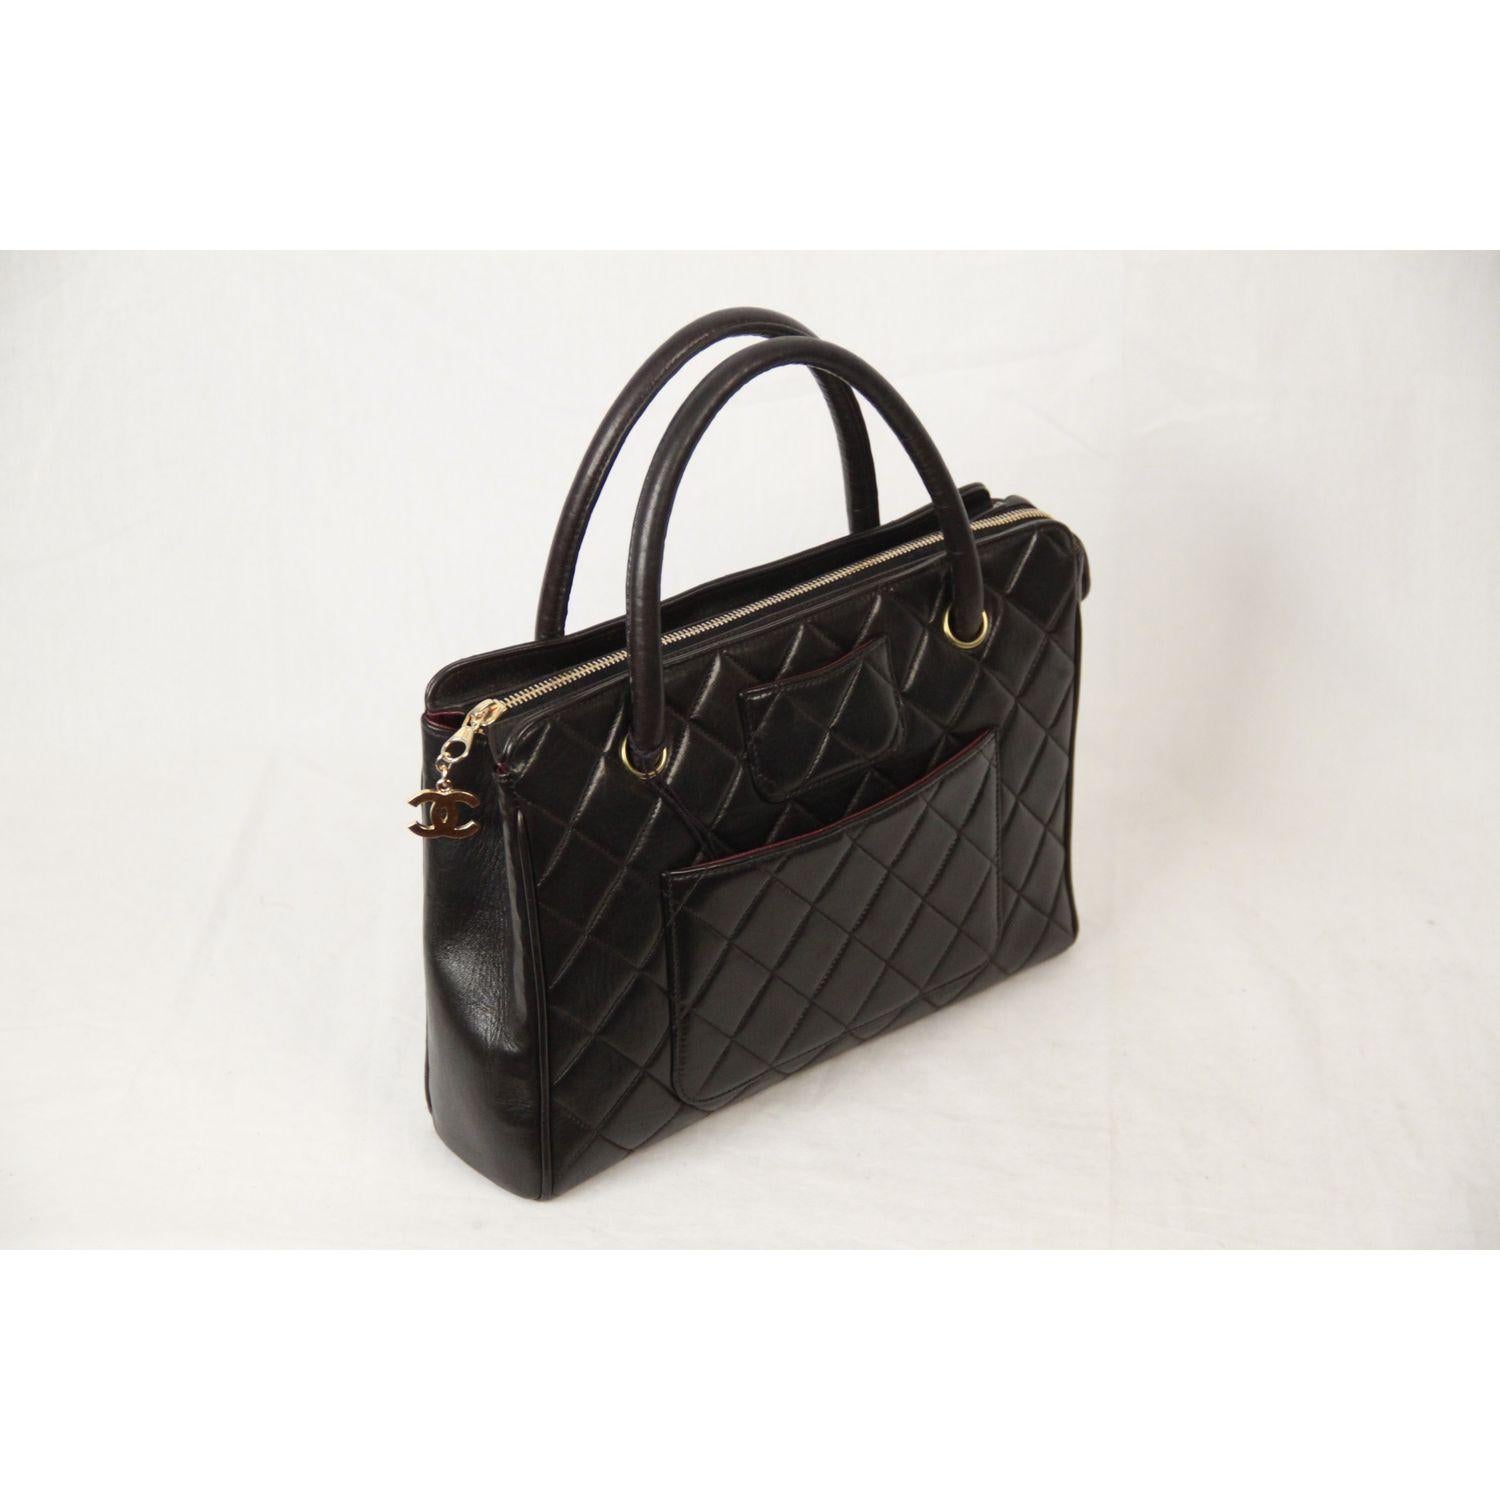 Chanel Vintage Black Quilted Handbag Satchel with Exterior Pockets 4